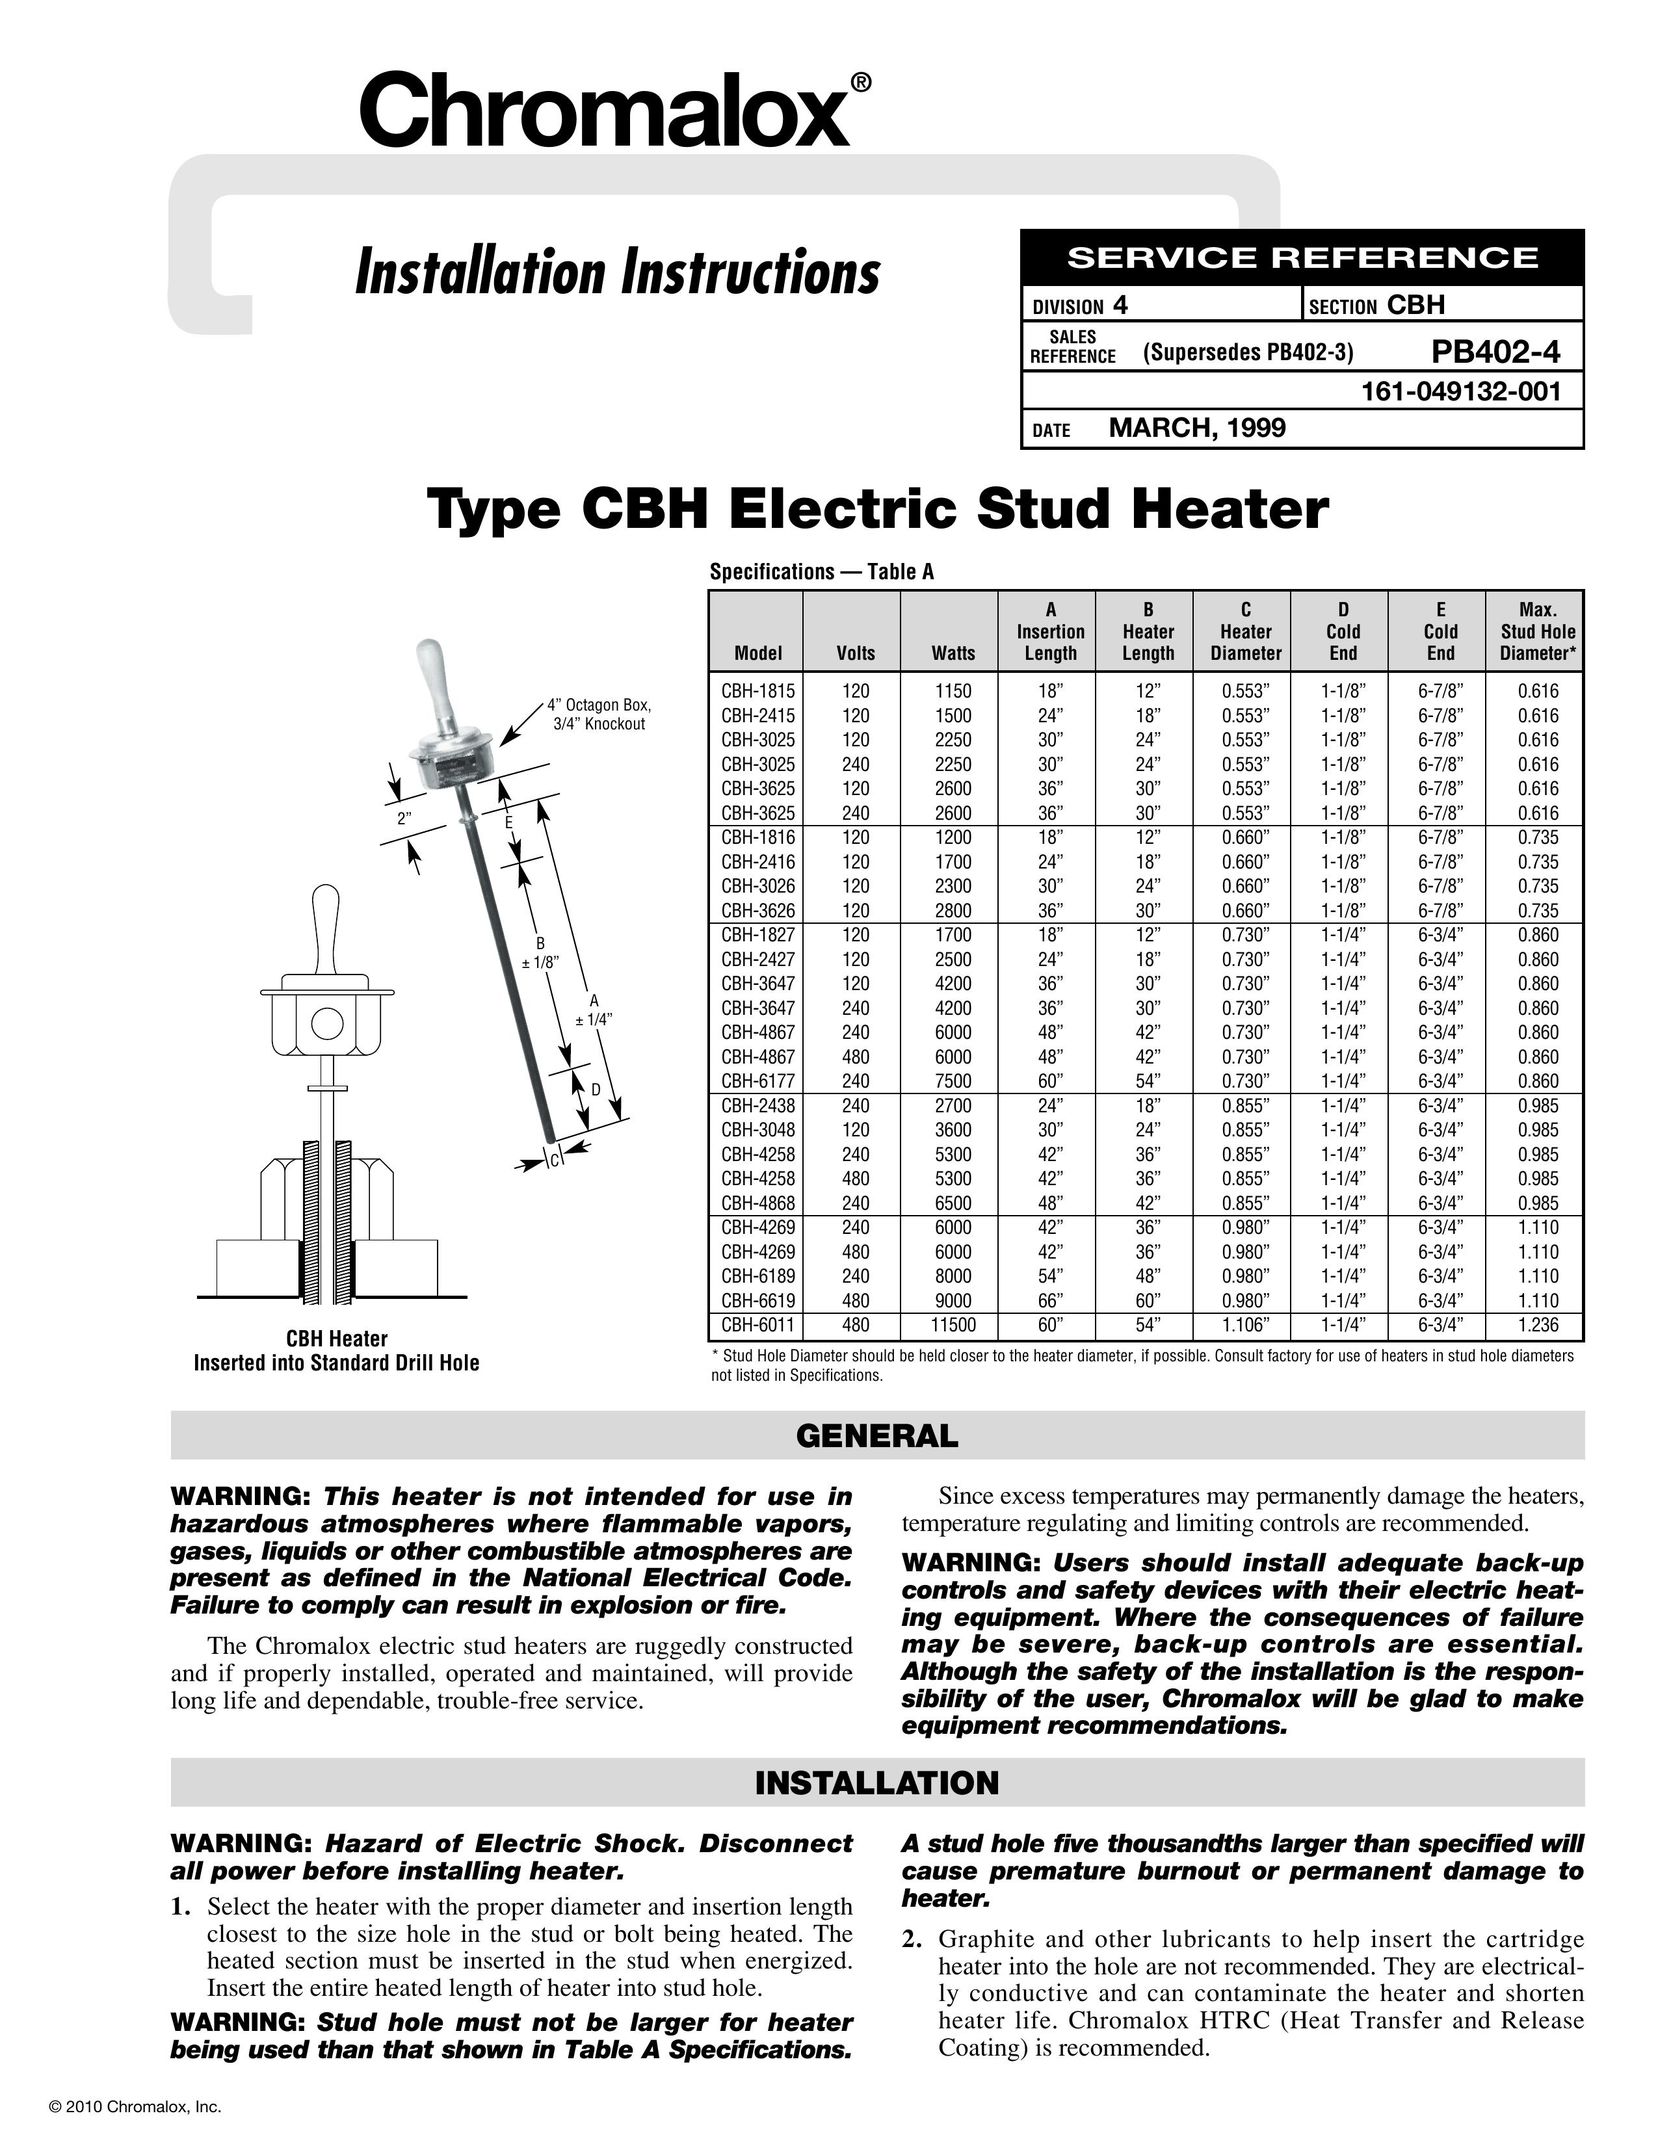 Chromalox PB402-4 Electric Heater User Manual